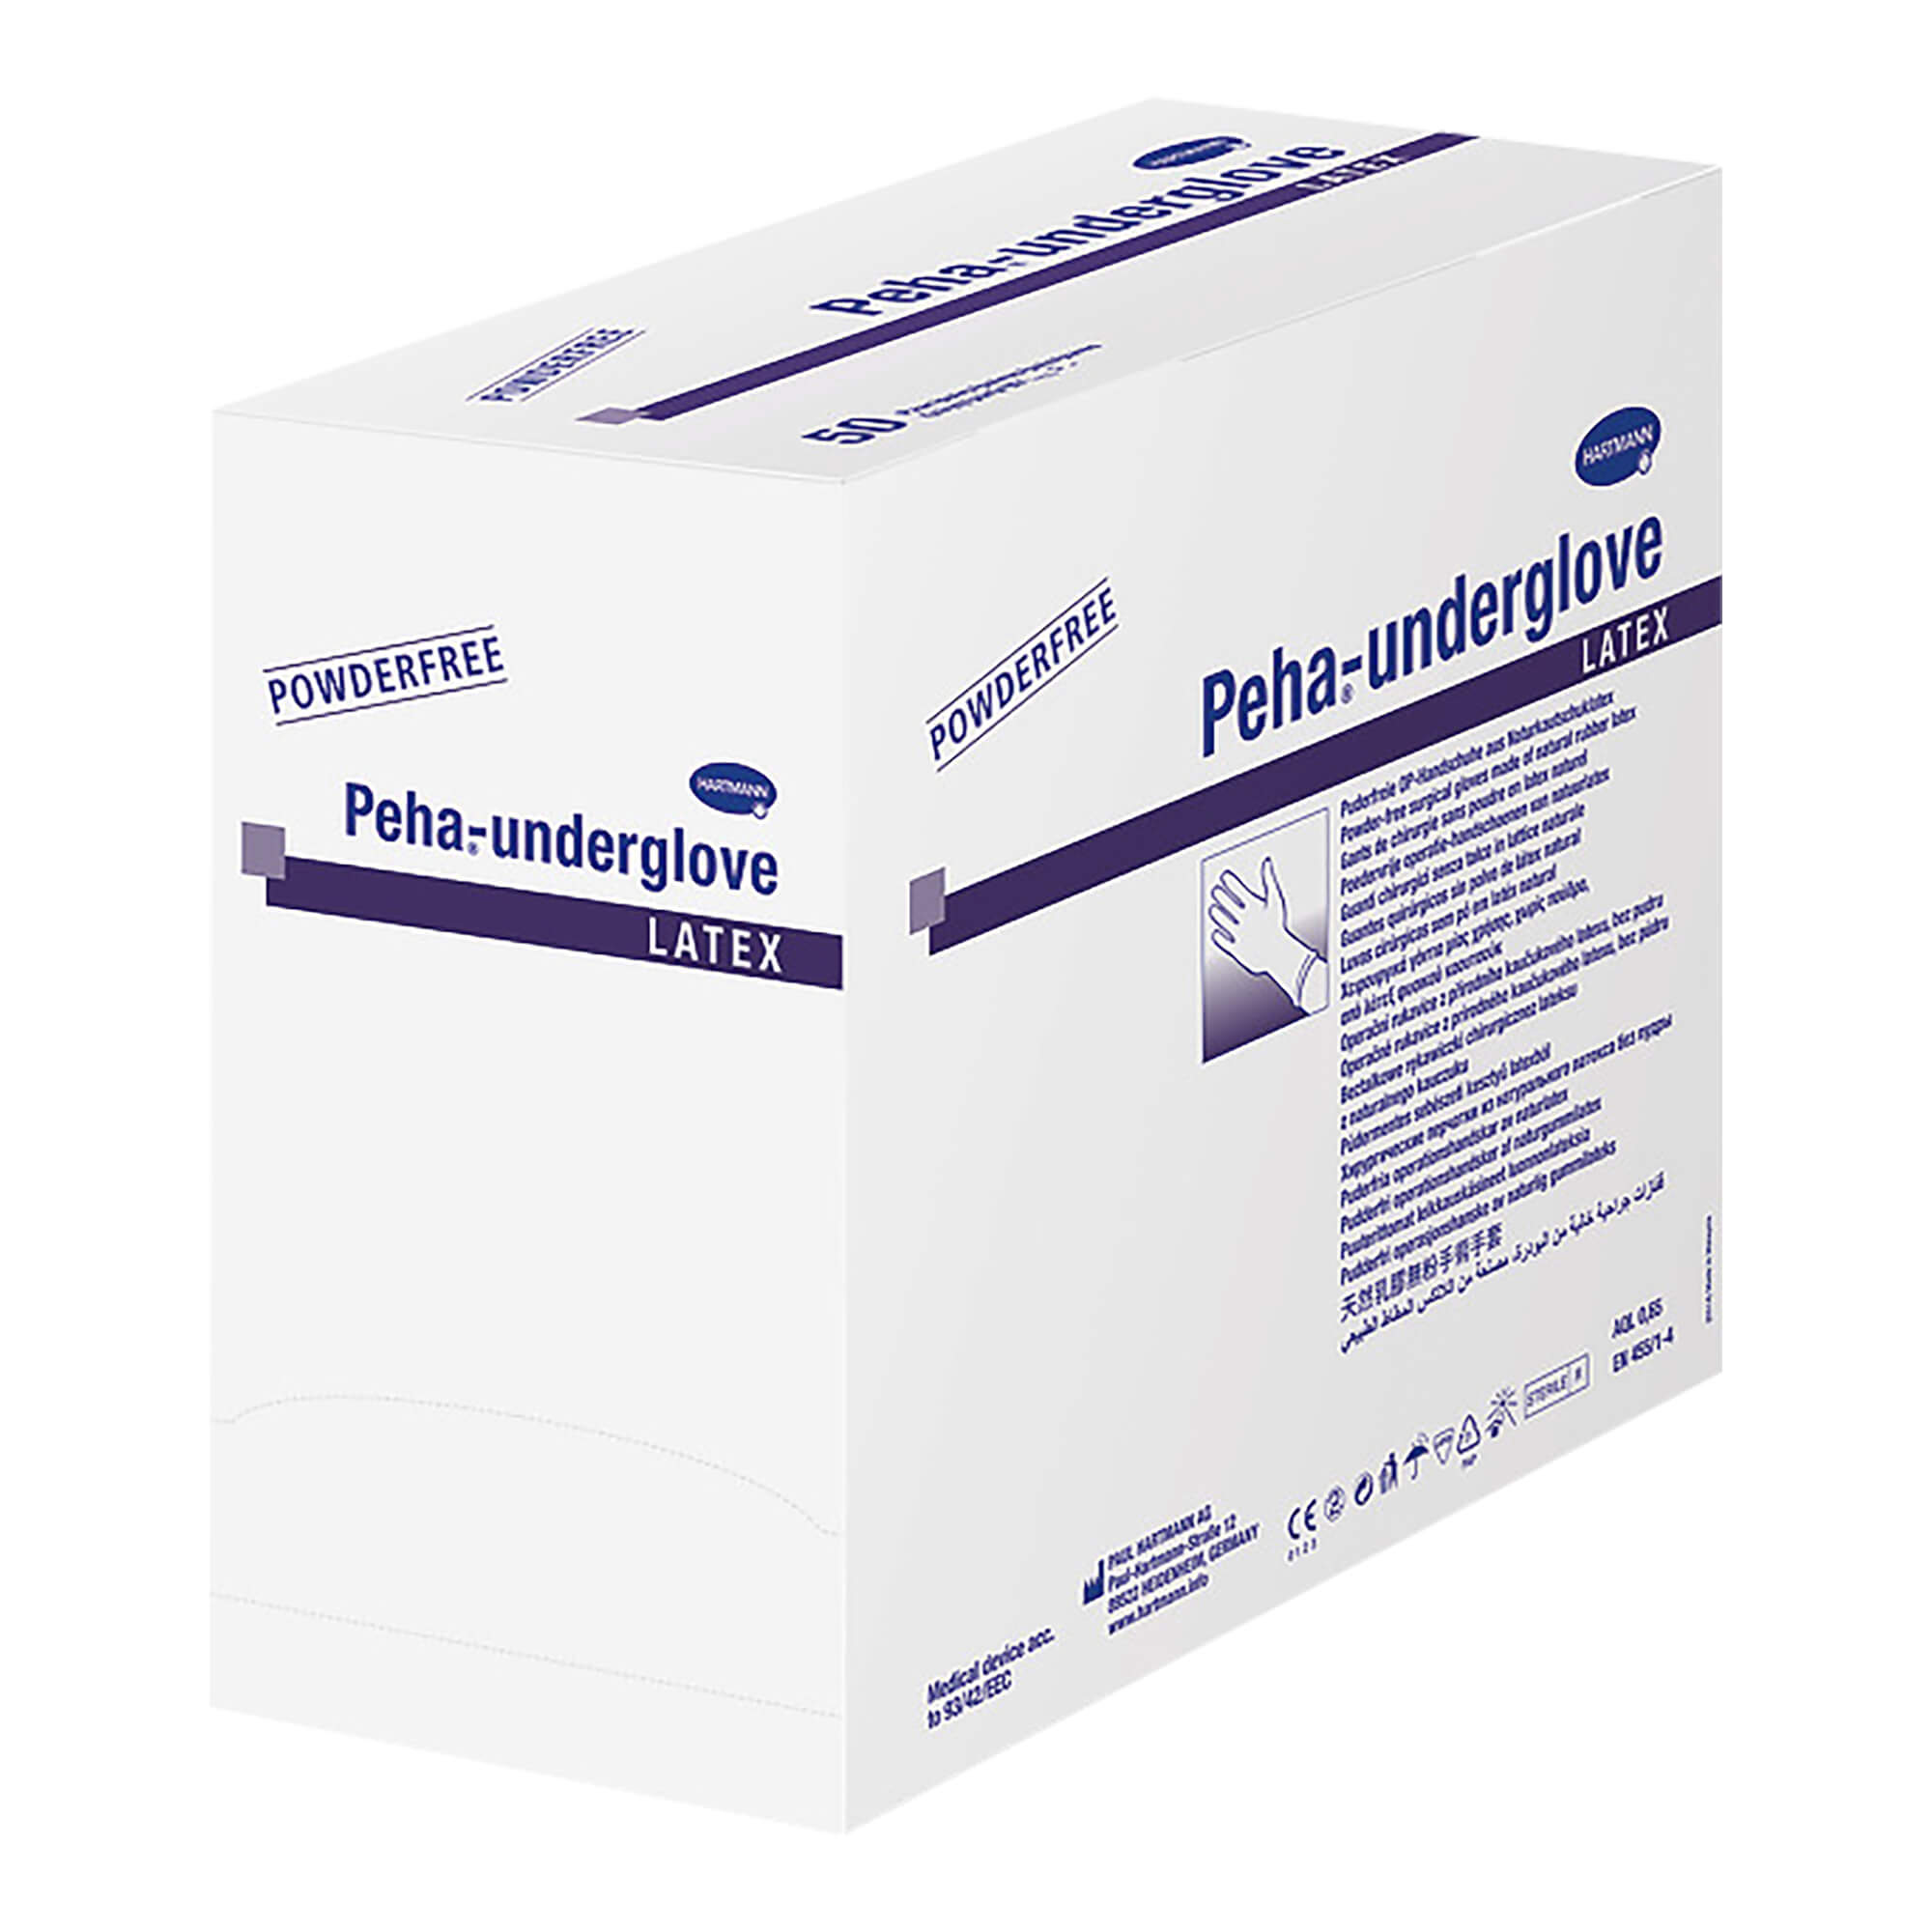 Empfohlen als Unterziehhandschuh in Kombination mit Peha-profile latex, Peha-taft classic powderfree und Peha-taft latex.